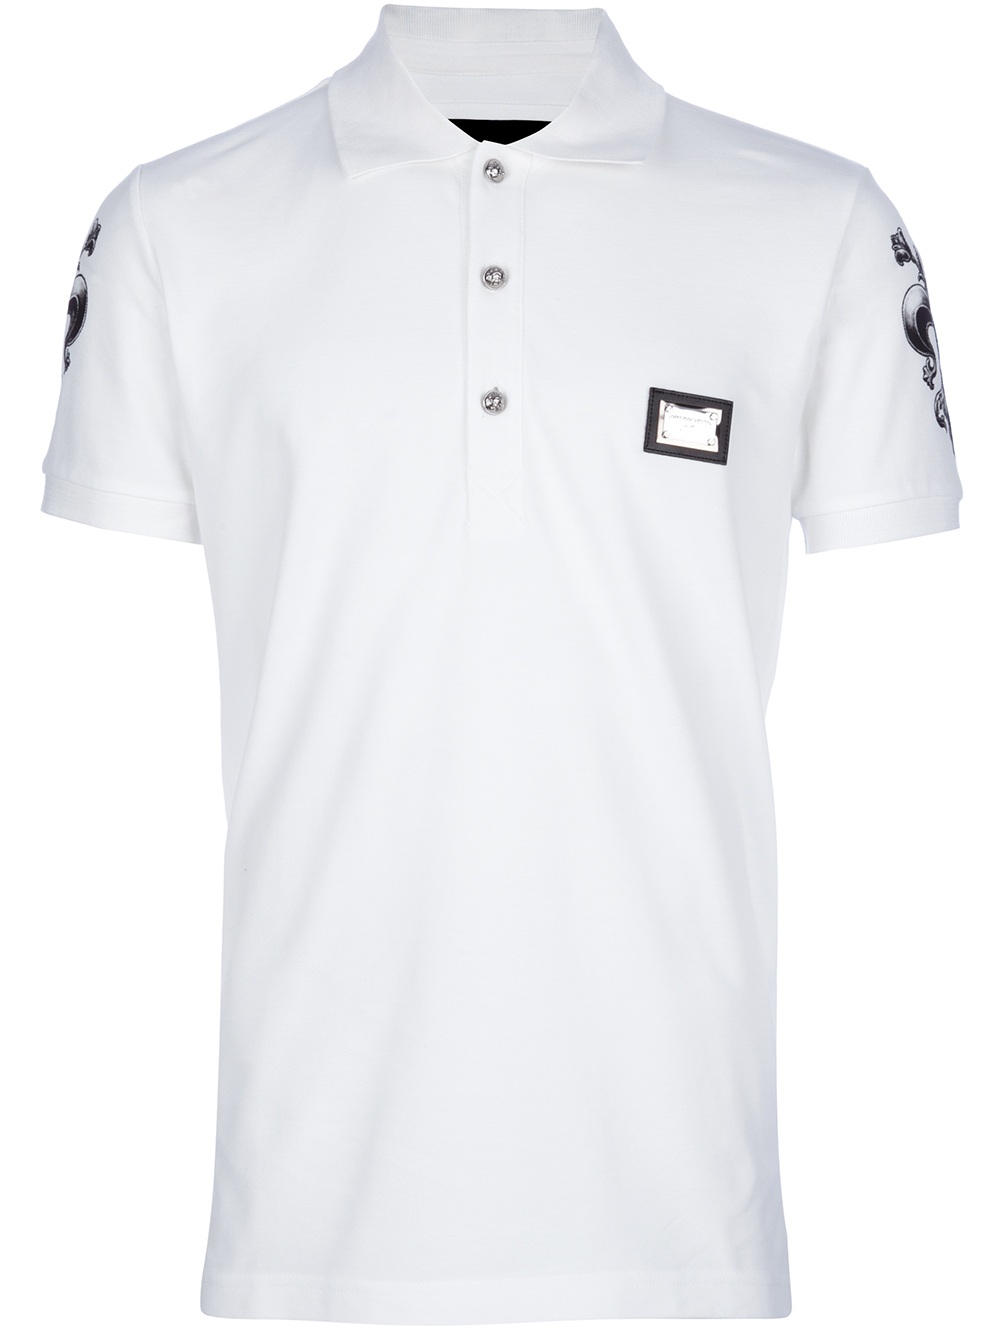 Lyst - Philipp Plein Logo Polo Shirt in White for Men